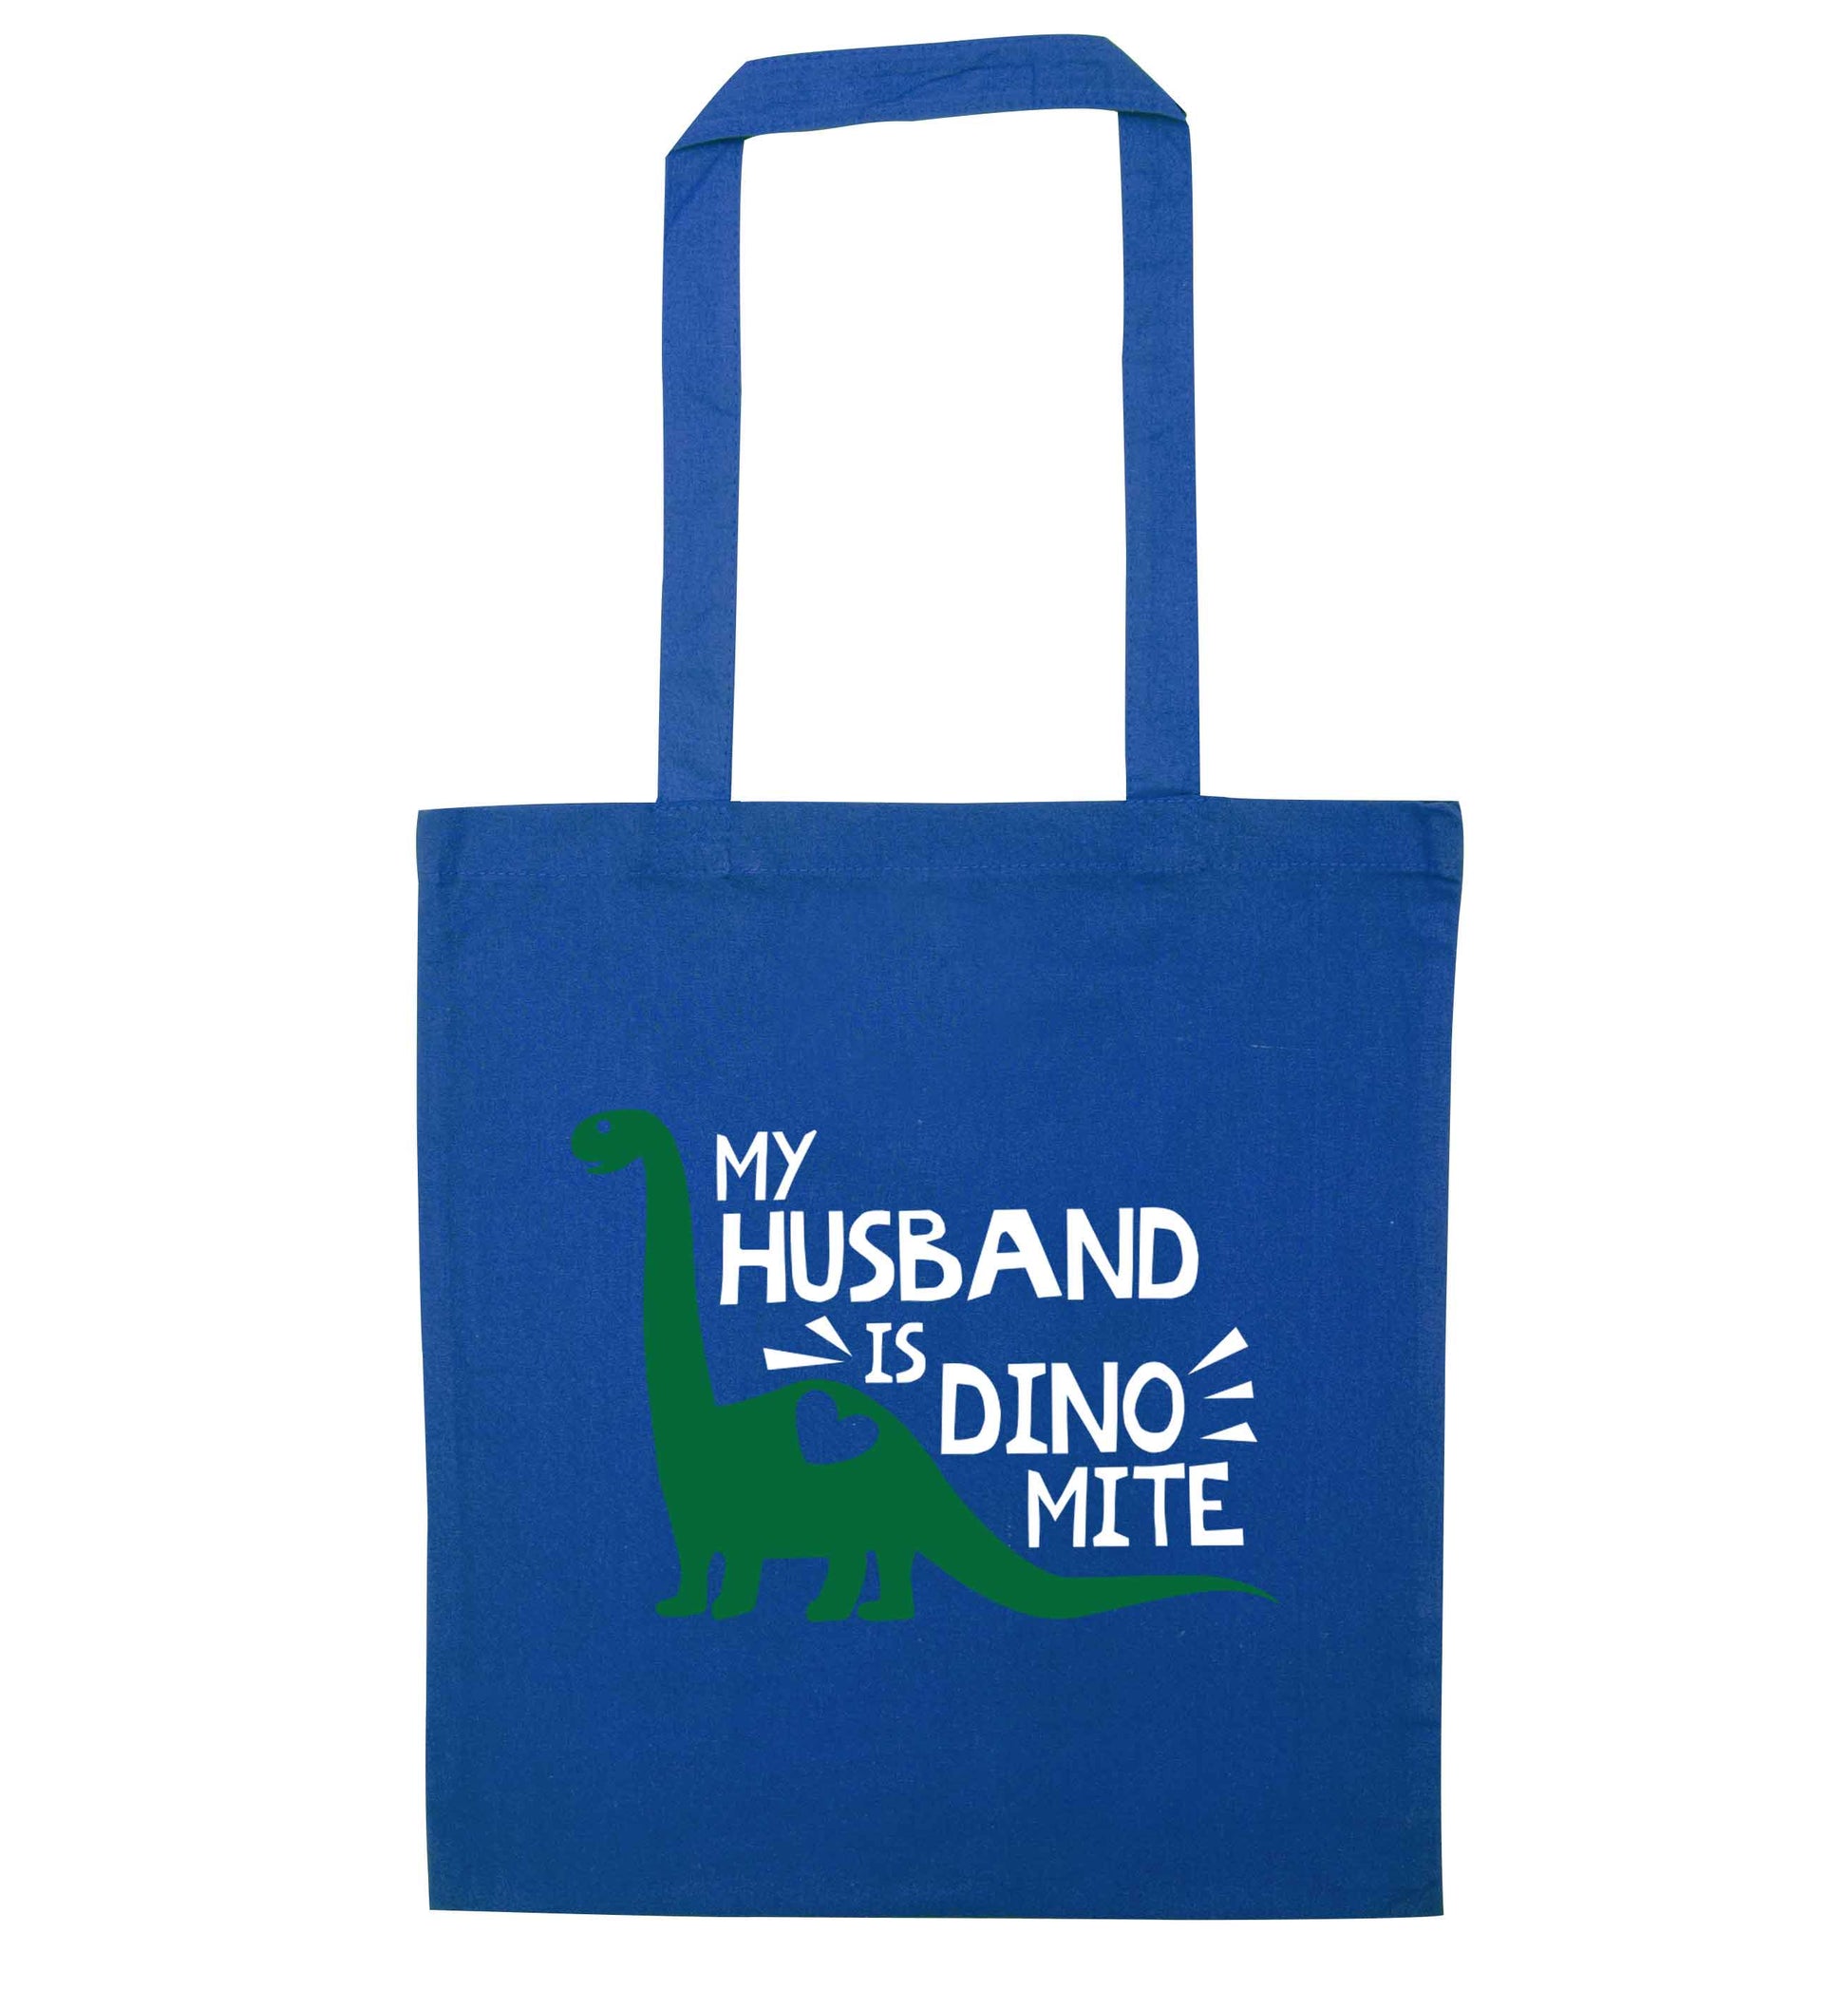 My husband is dinomite! blue tote bag